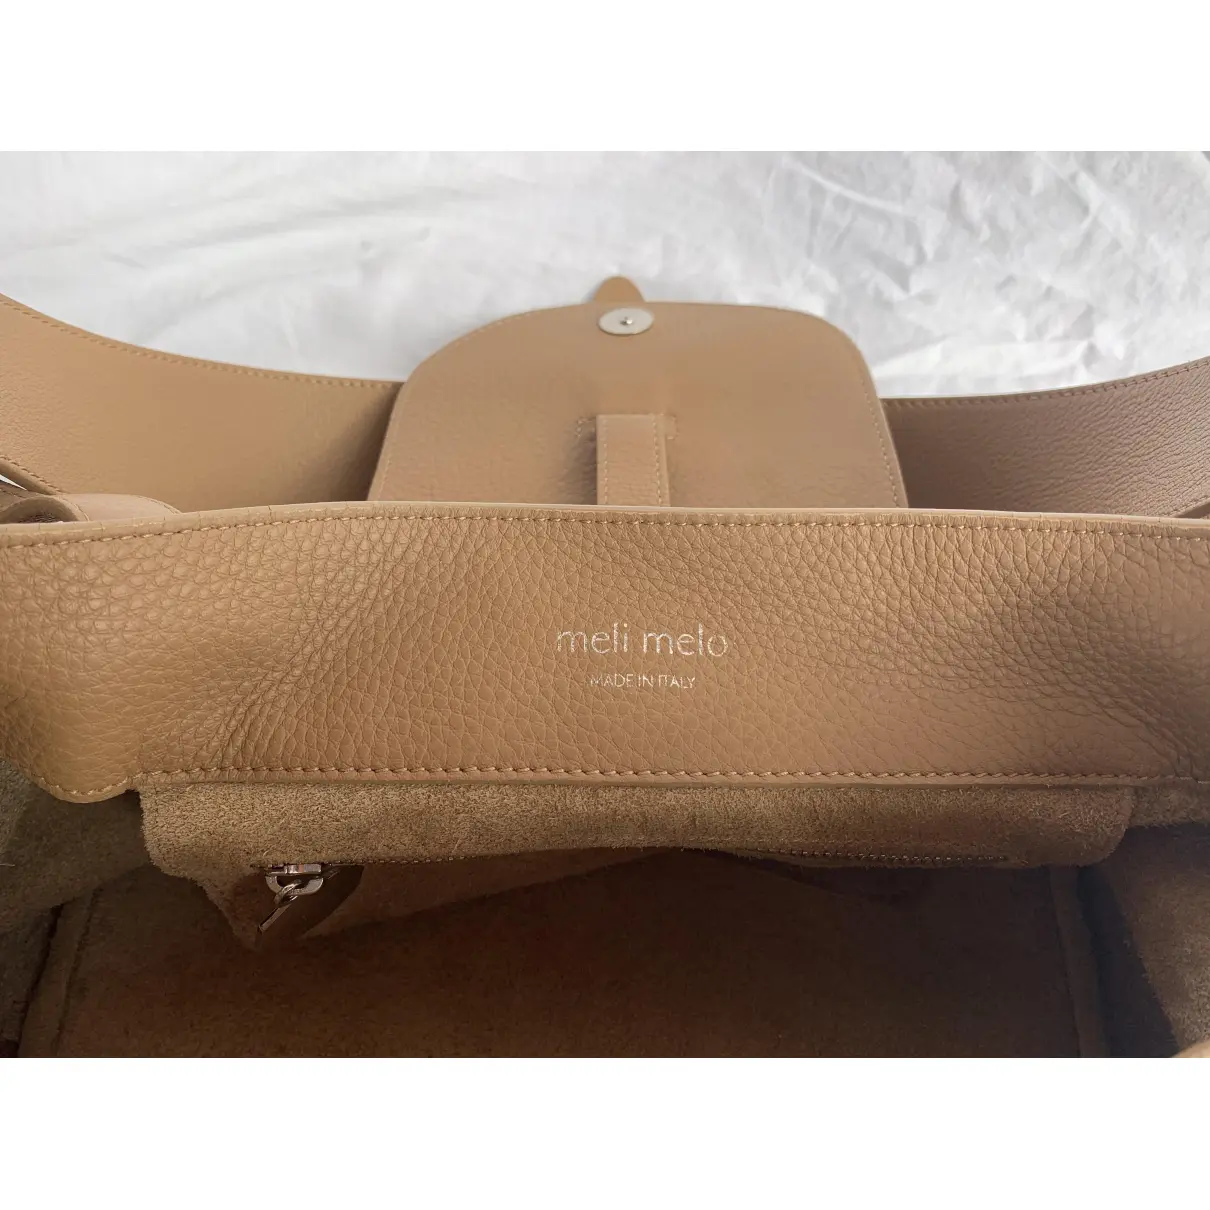 Luxury Meli Melo Handbags Women